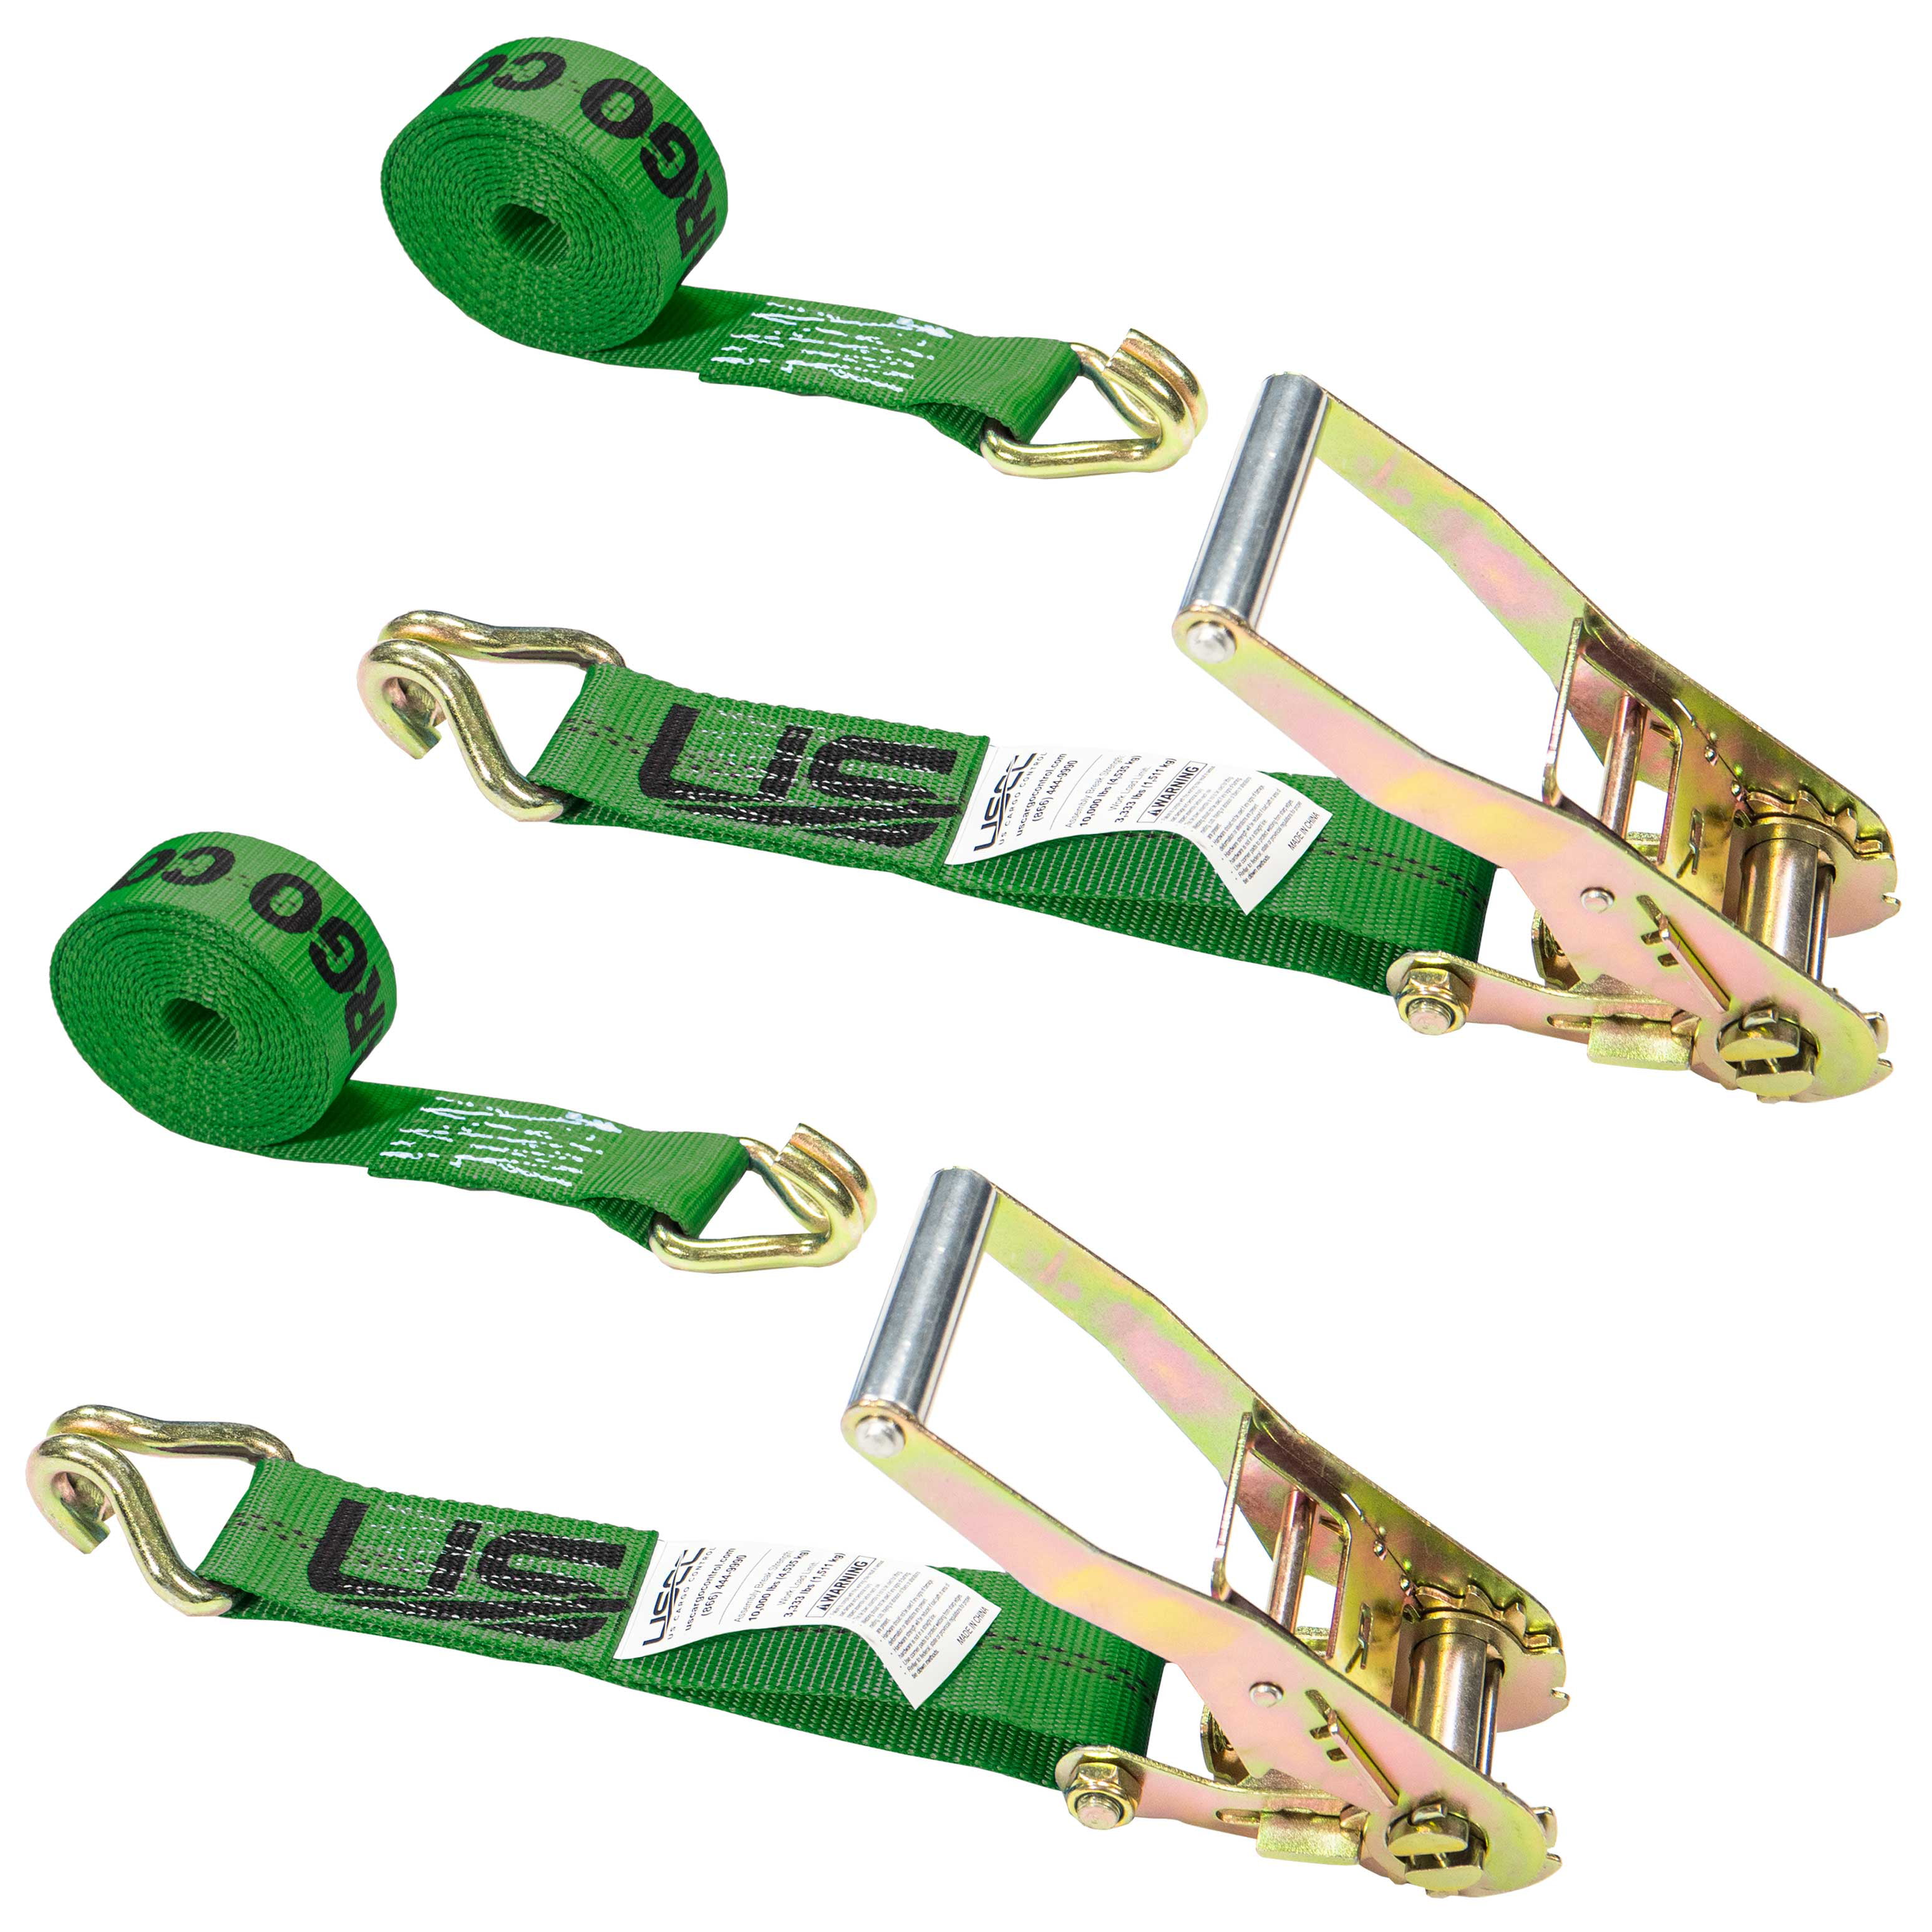 2 x 18' Green Ratchet Strap w/ Double J Hook - 2 Pack 